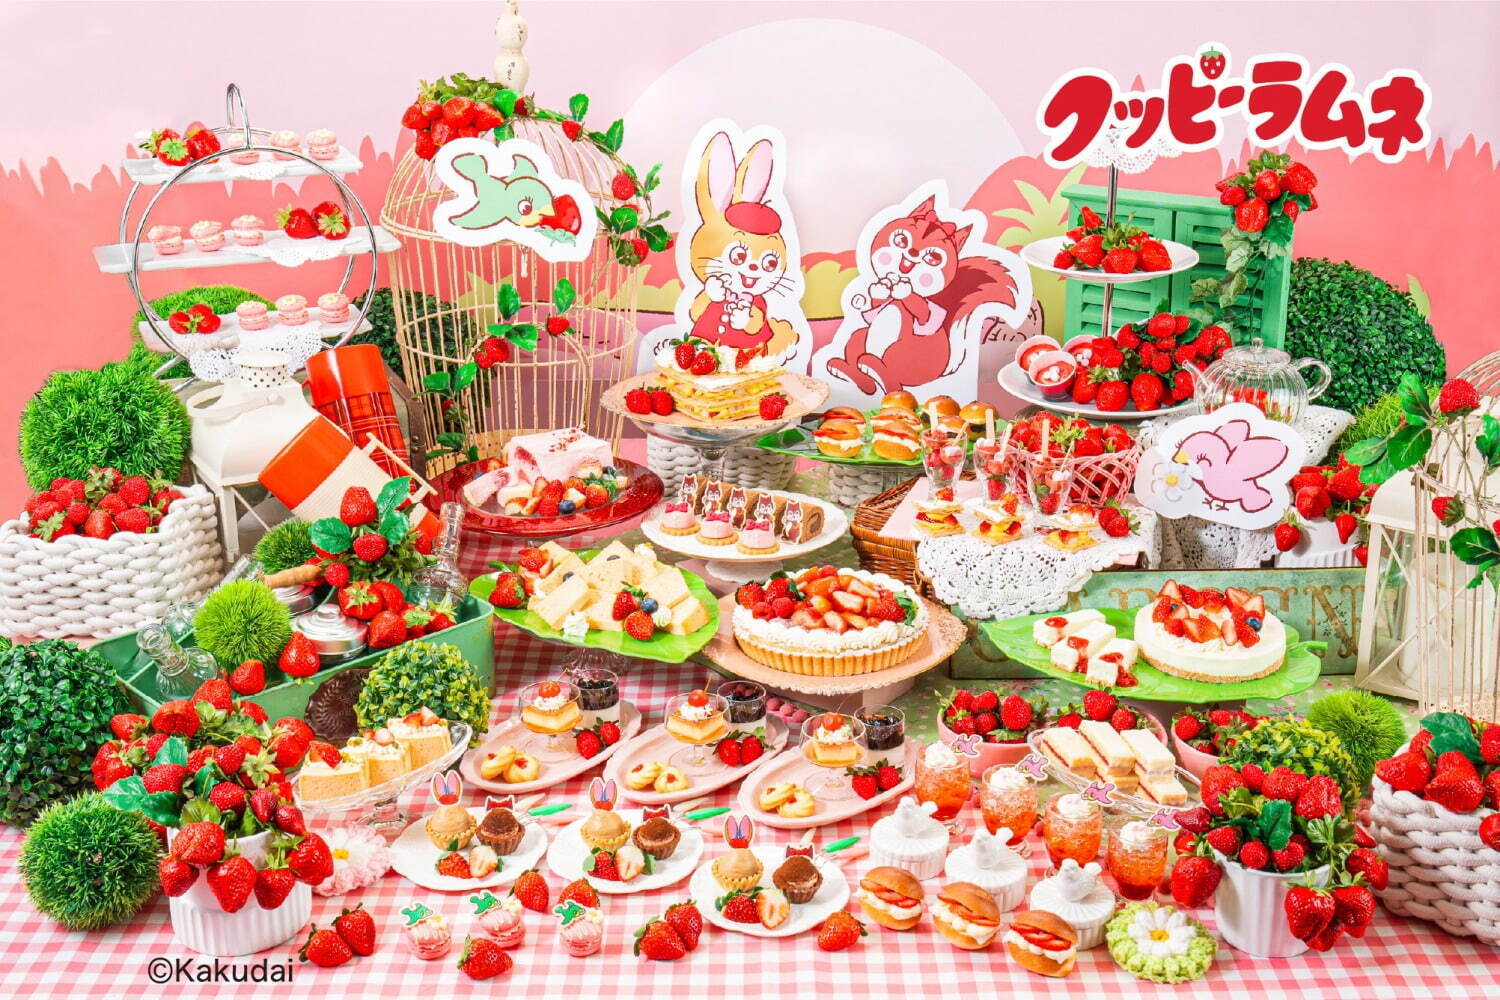 Keio Plaza Hotel Strawberry Sweets Buffet